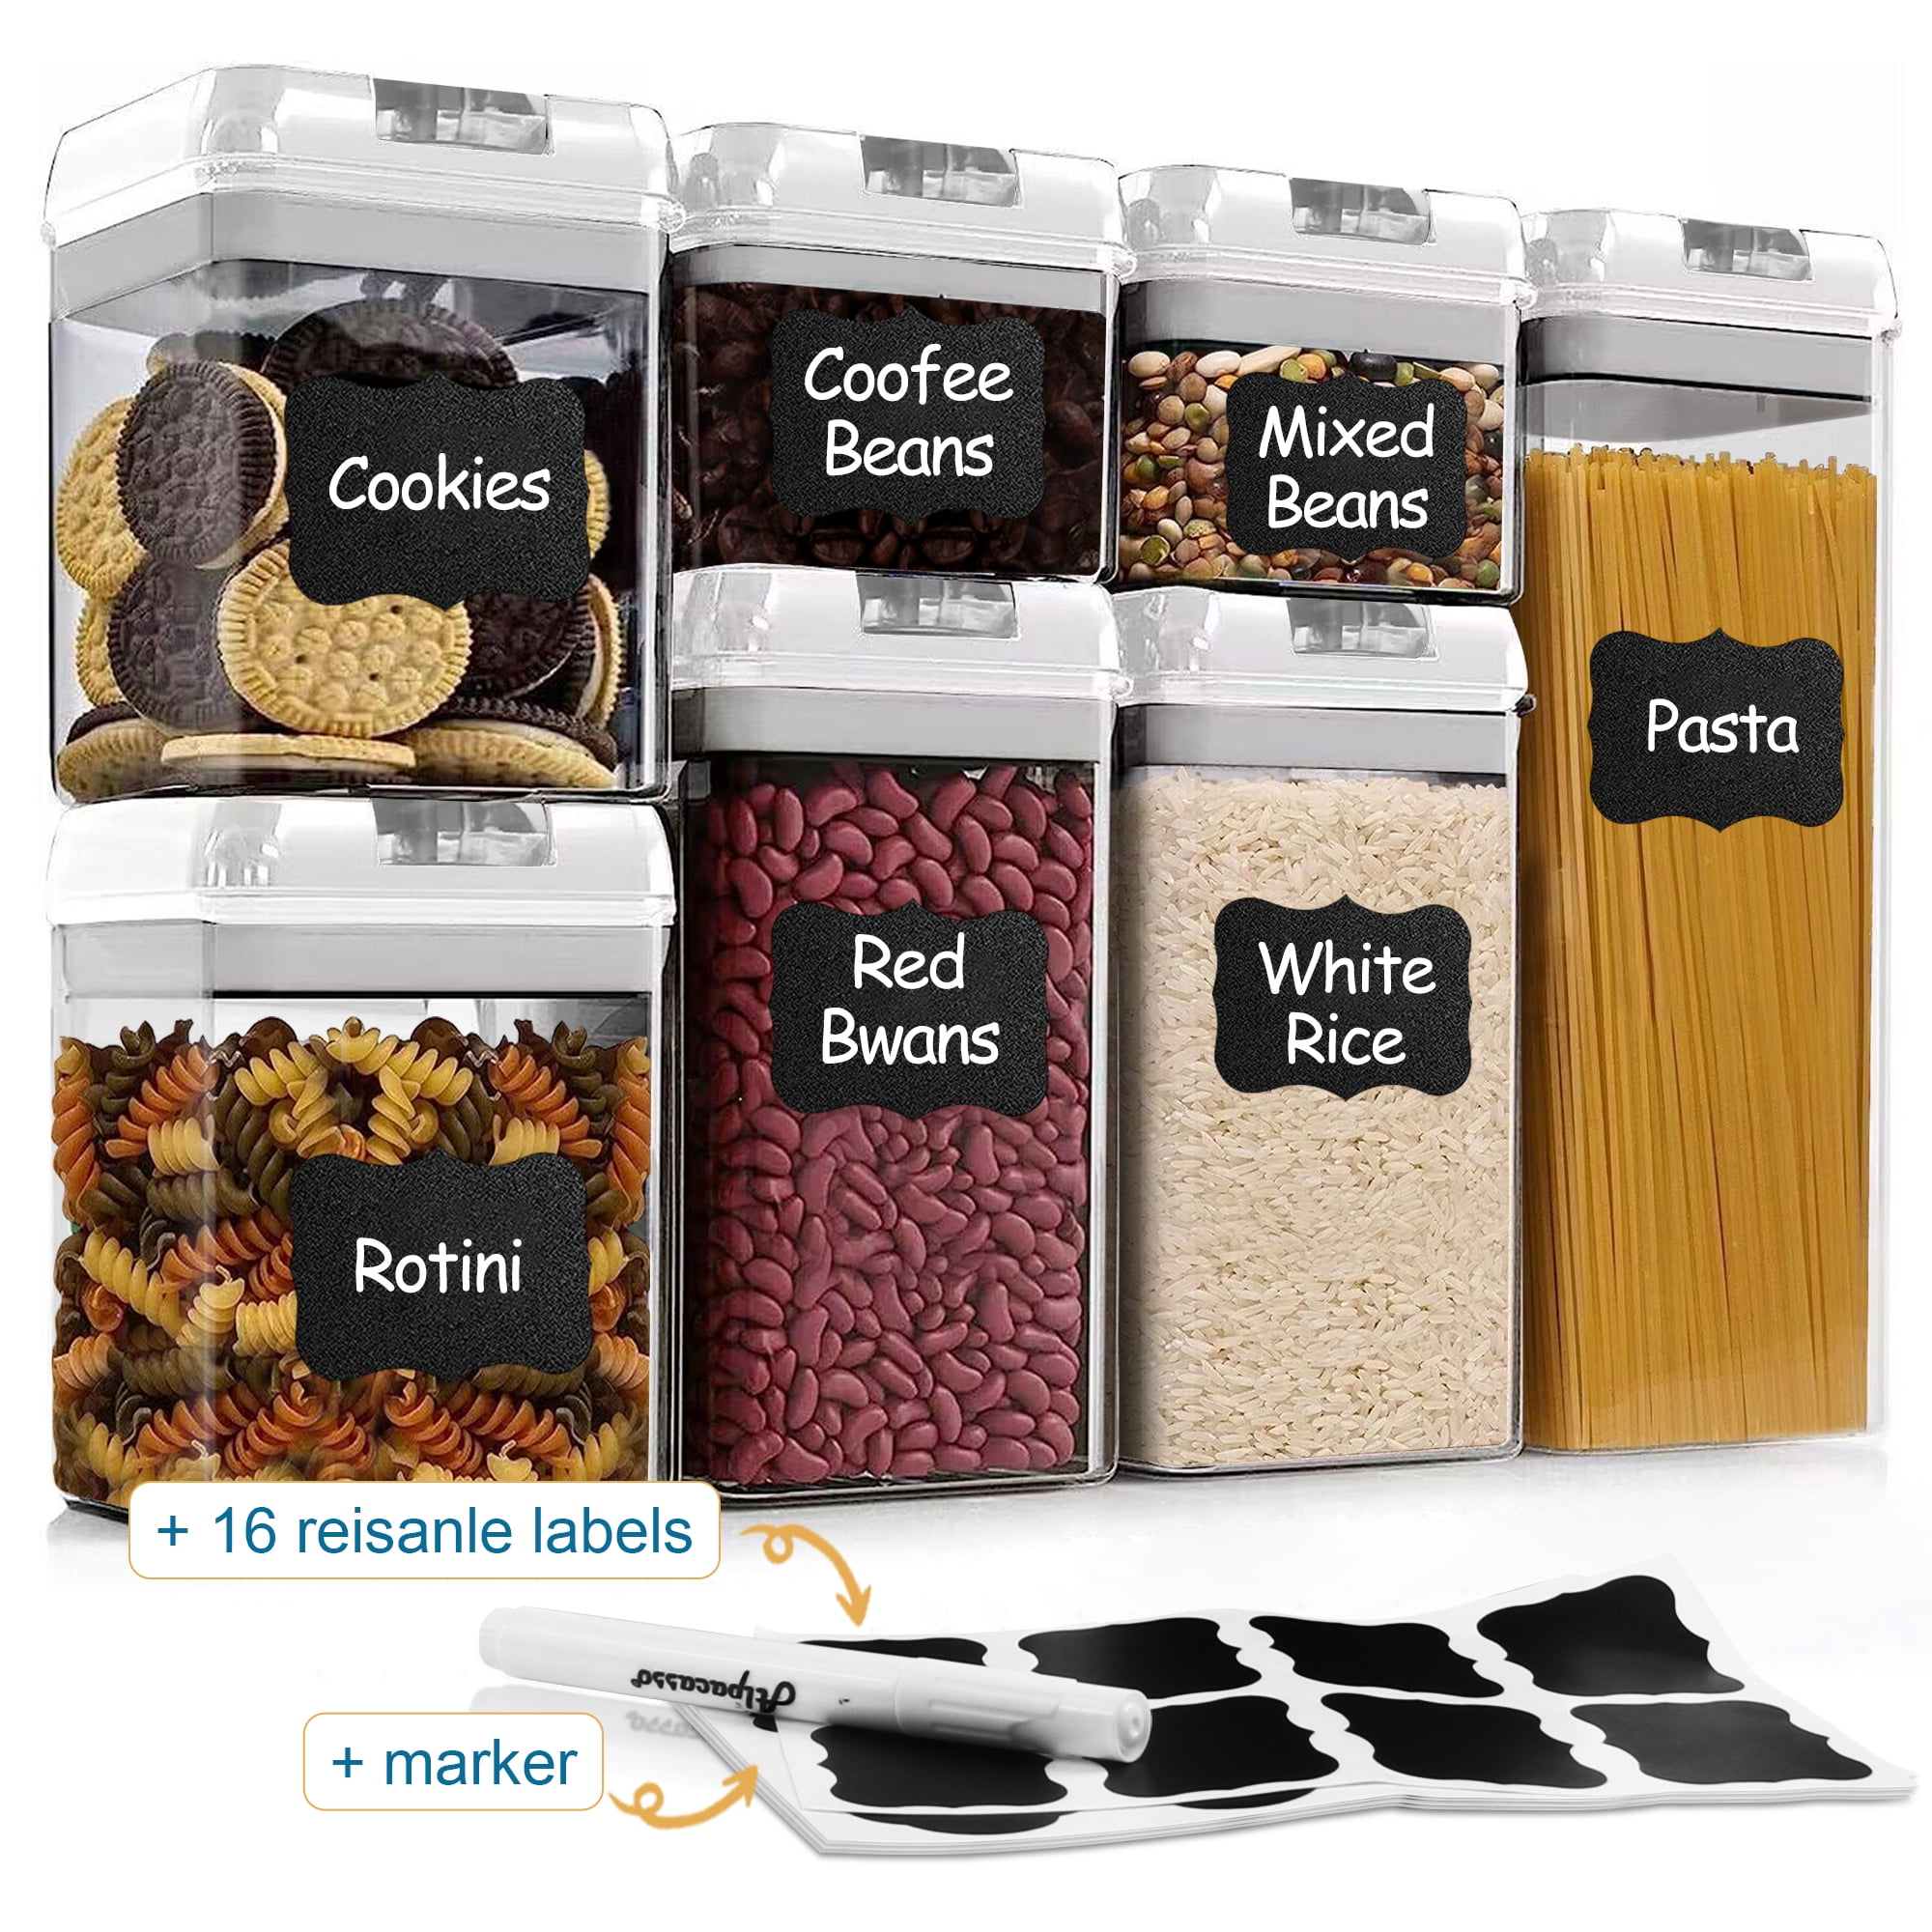 PRAKI 5pcs Cereal Containers Storage Set, BPA Free Airtight Food Storage Container Set with Lids, Kitchen Pantry Organization